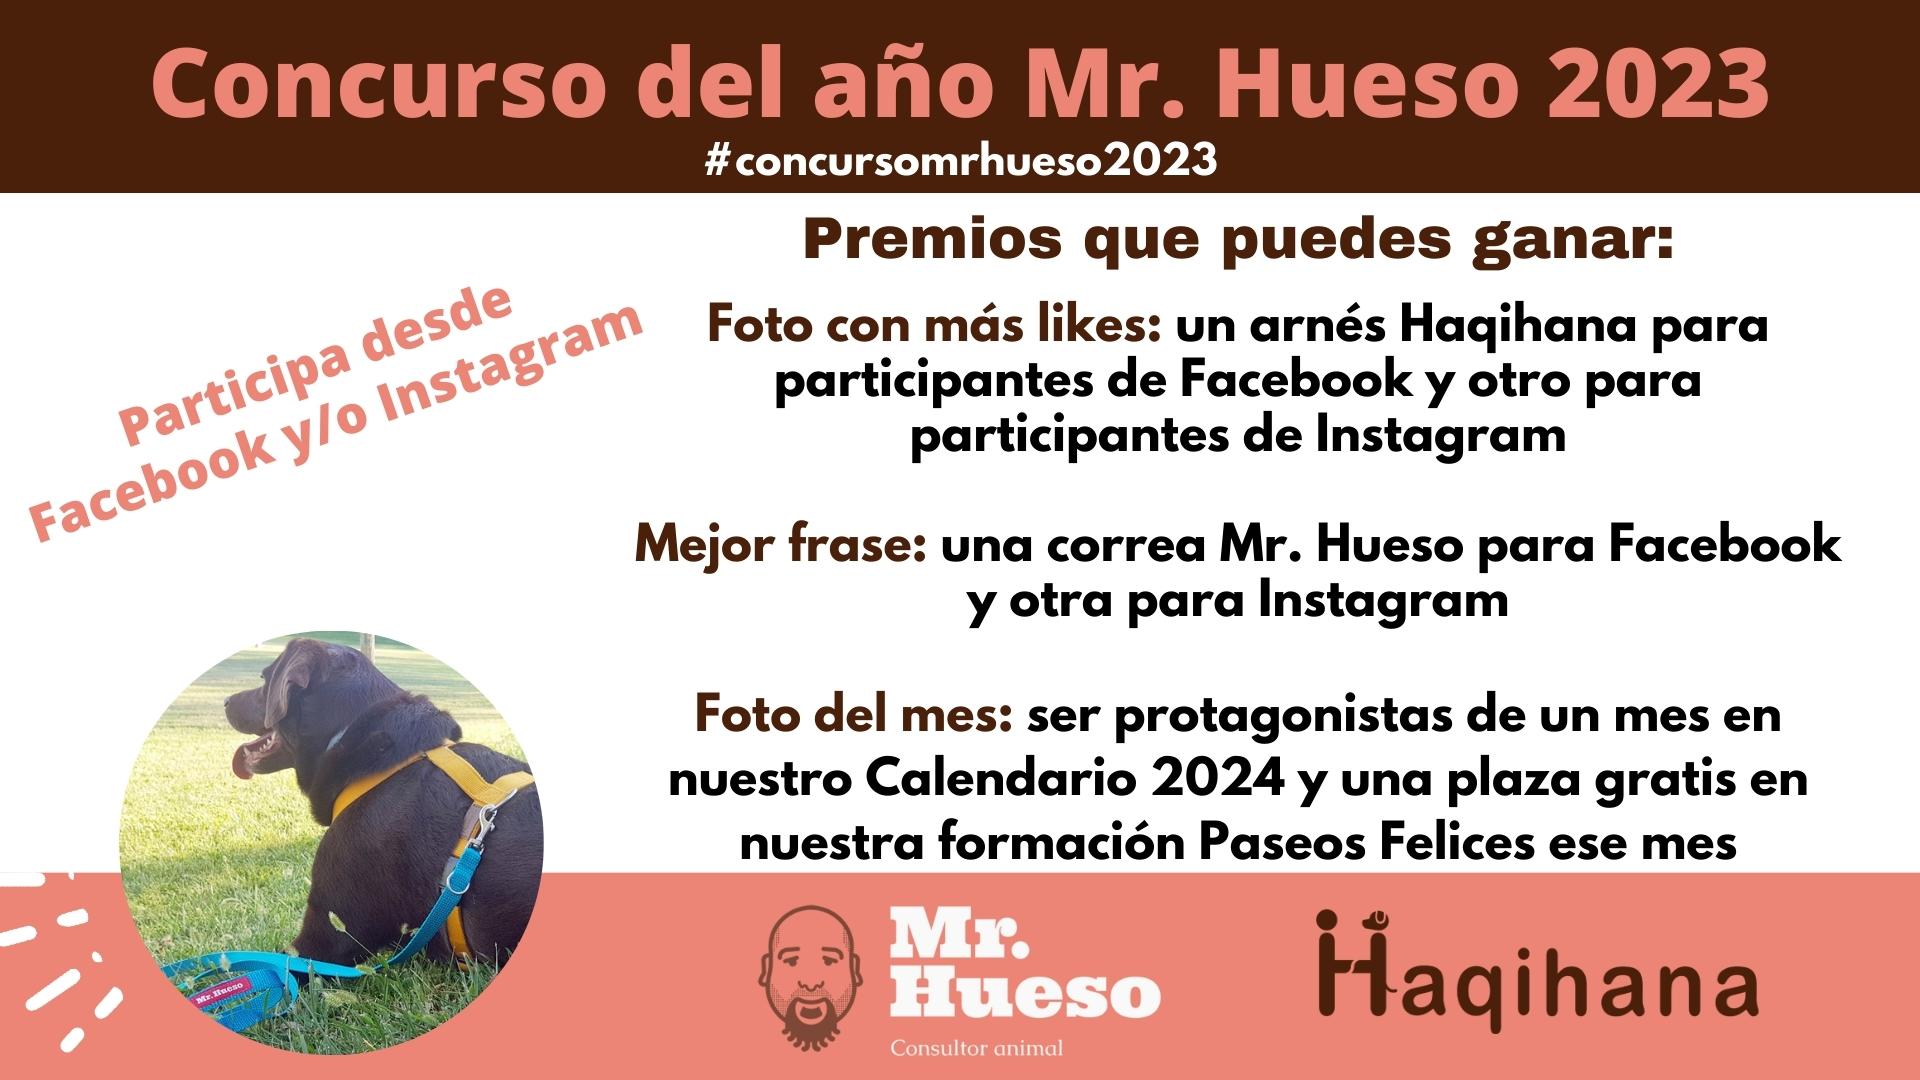 Premios del Concurso del año Mr. Hueso 2023